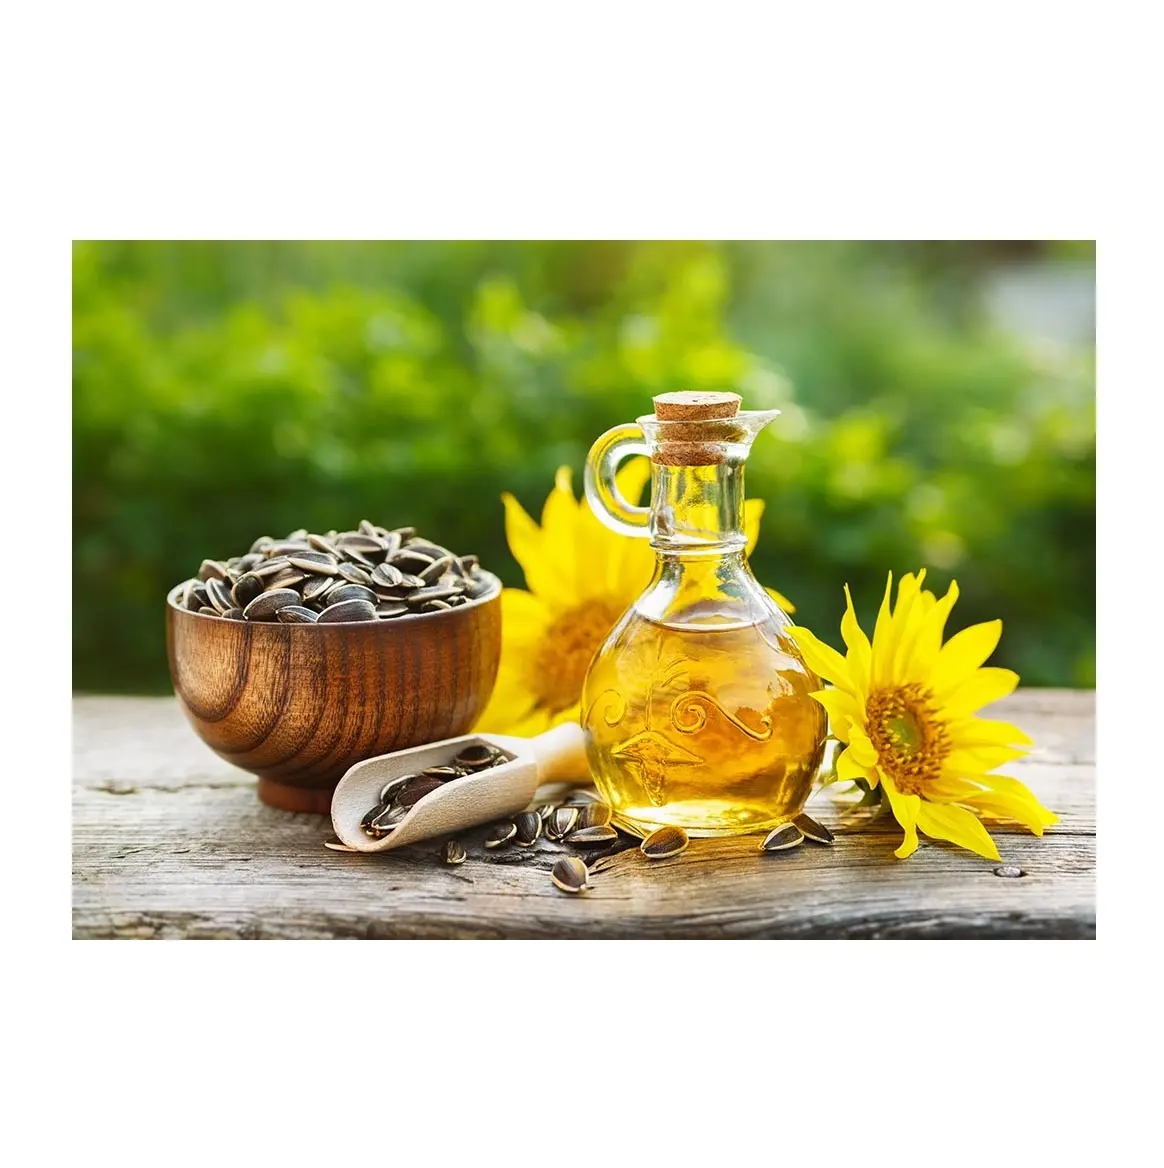 Beli minyak bunga matahari/minyak goreng dapat dimakan/minyak bunga matahari murni dalam jumlah besar dengan harga sangat murah